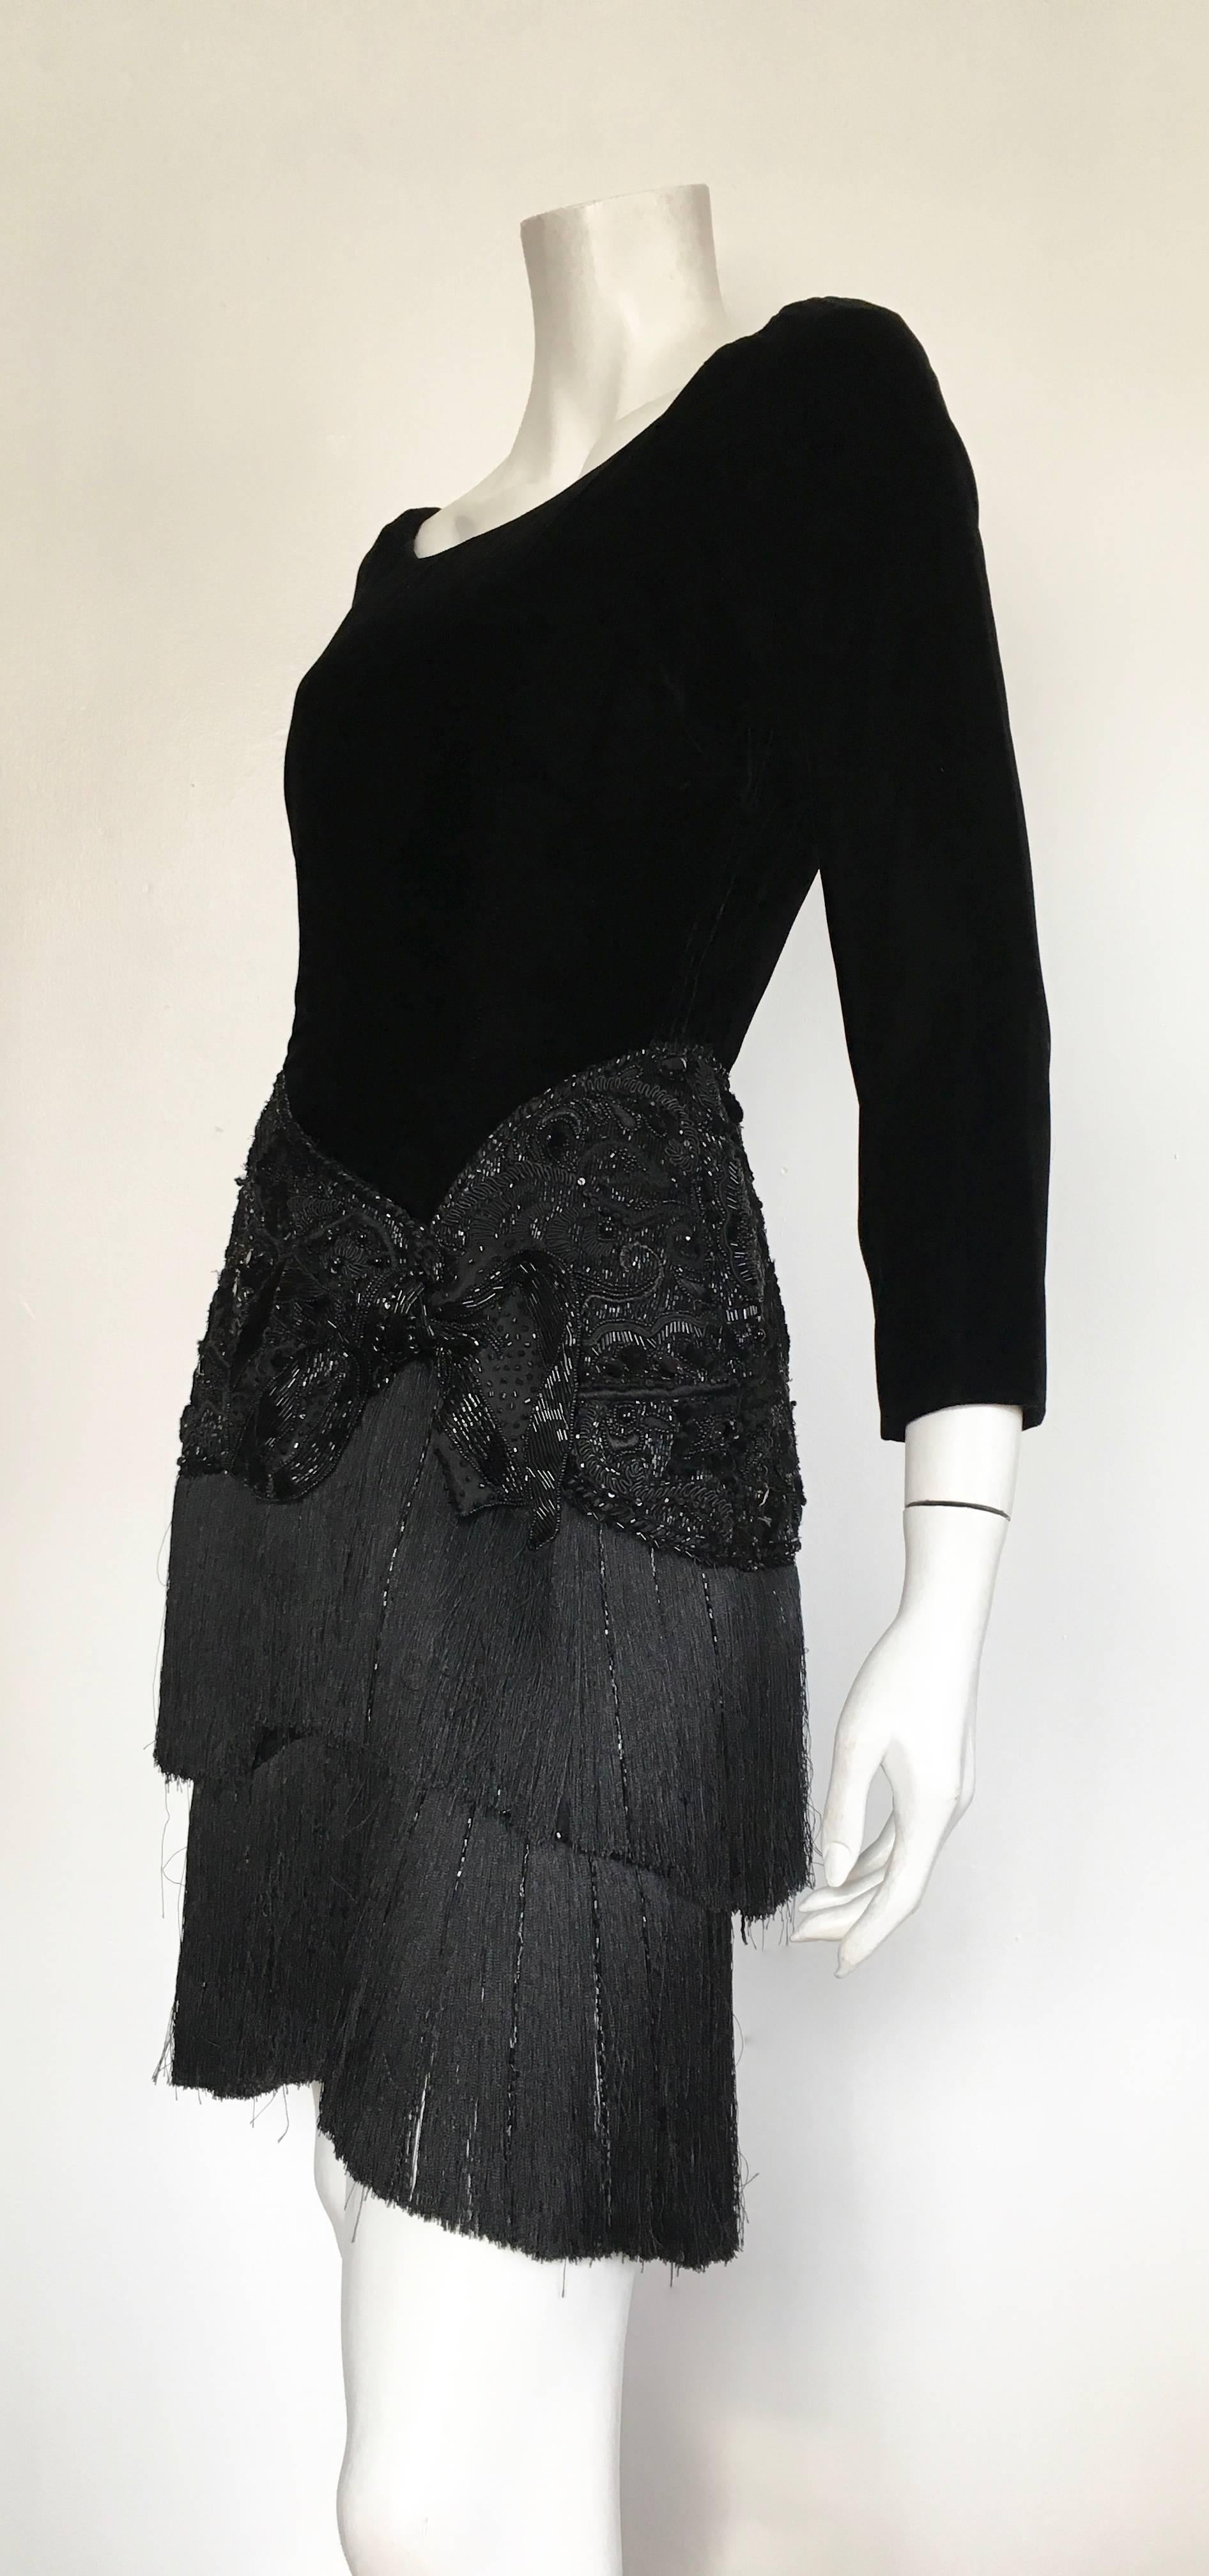 Oscar de la Renta for Saks Black Velvet Beaded and Fringed Cocktail Dress Size 6 For Sale 3